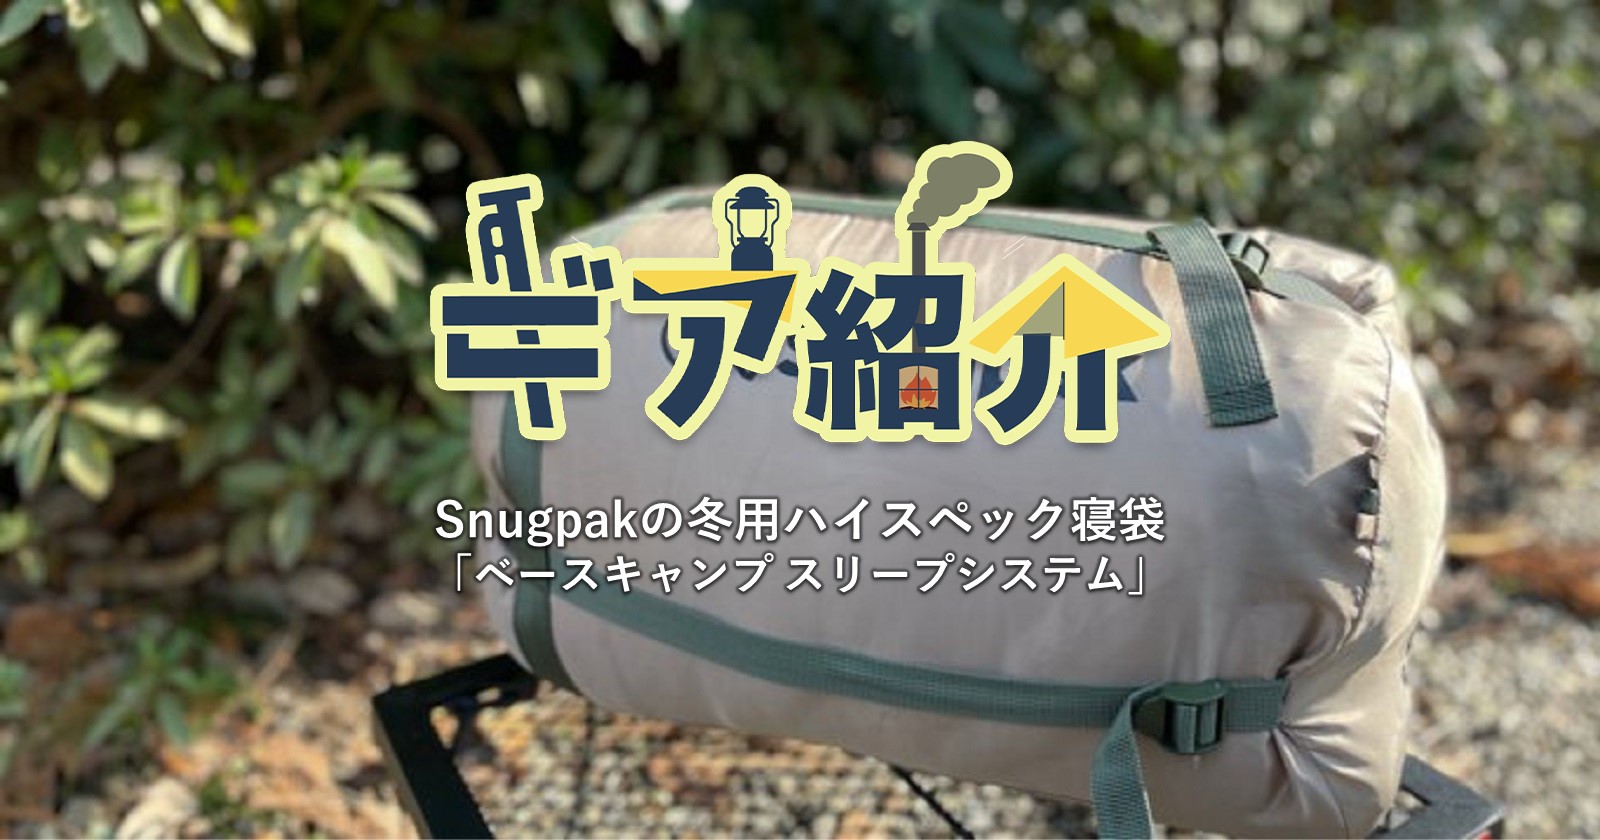 Snugpak(スナグパック) 寝袋 ベースキャンプ スリープシステム - 寝袋/寝具